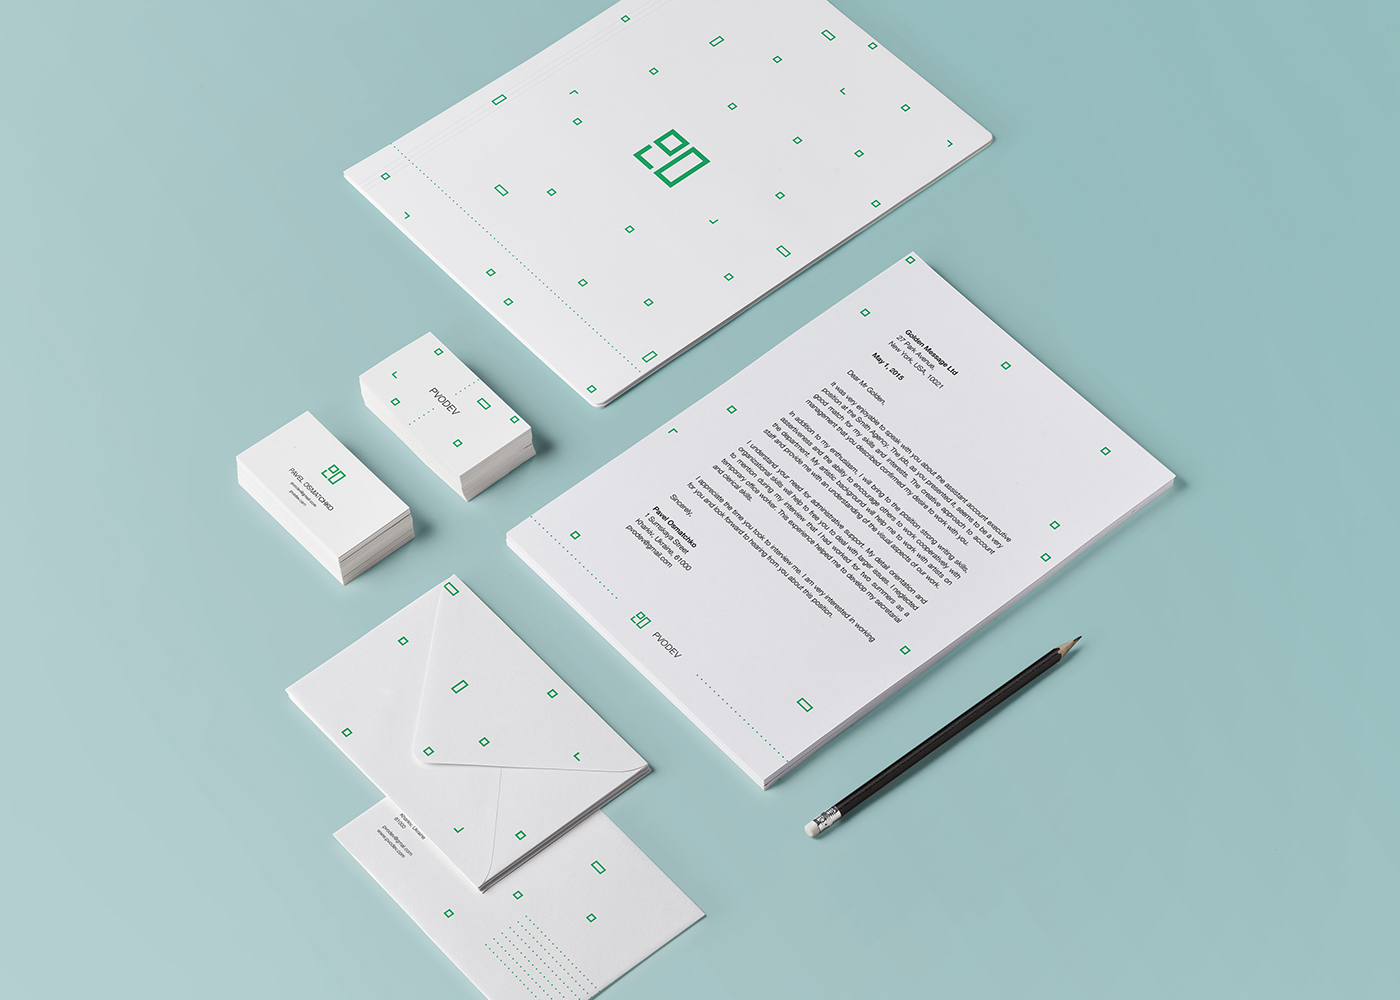 PVO pvodev brand UI cards logo emblem identity Style developer green Mockup mark